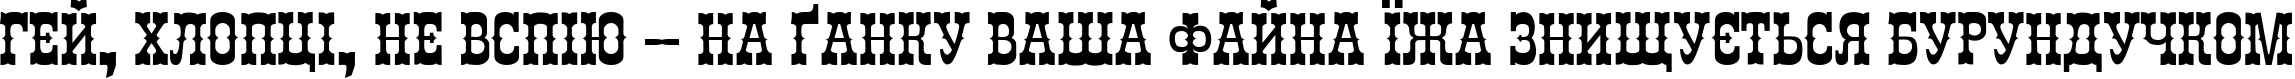 Пример написания шрифтом Chibola текста на украинском